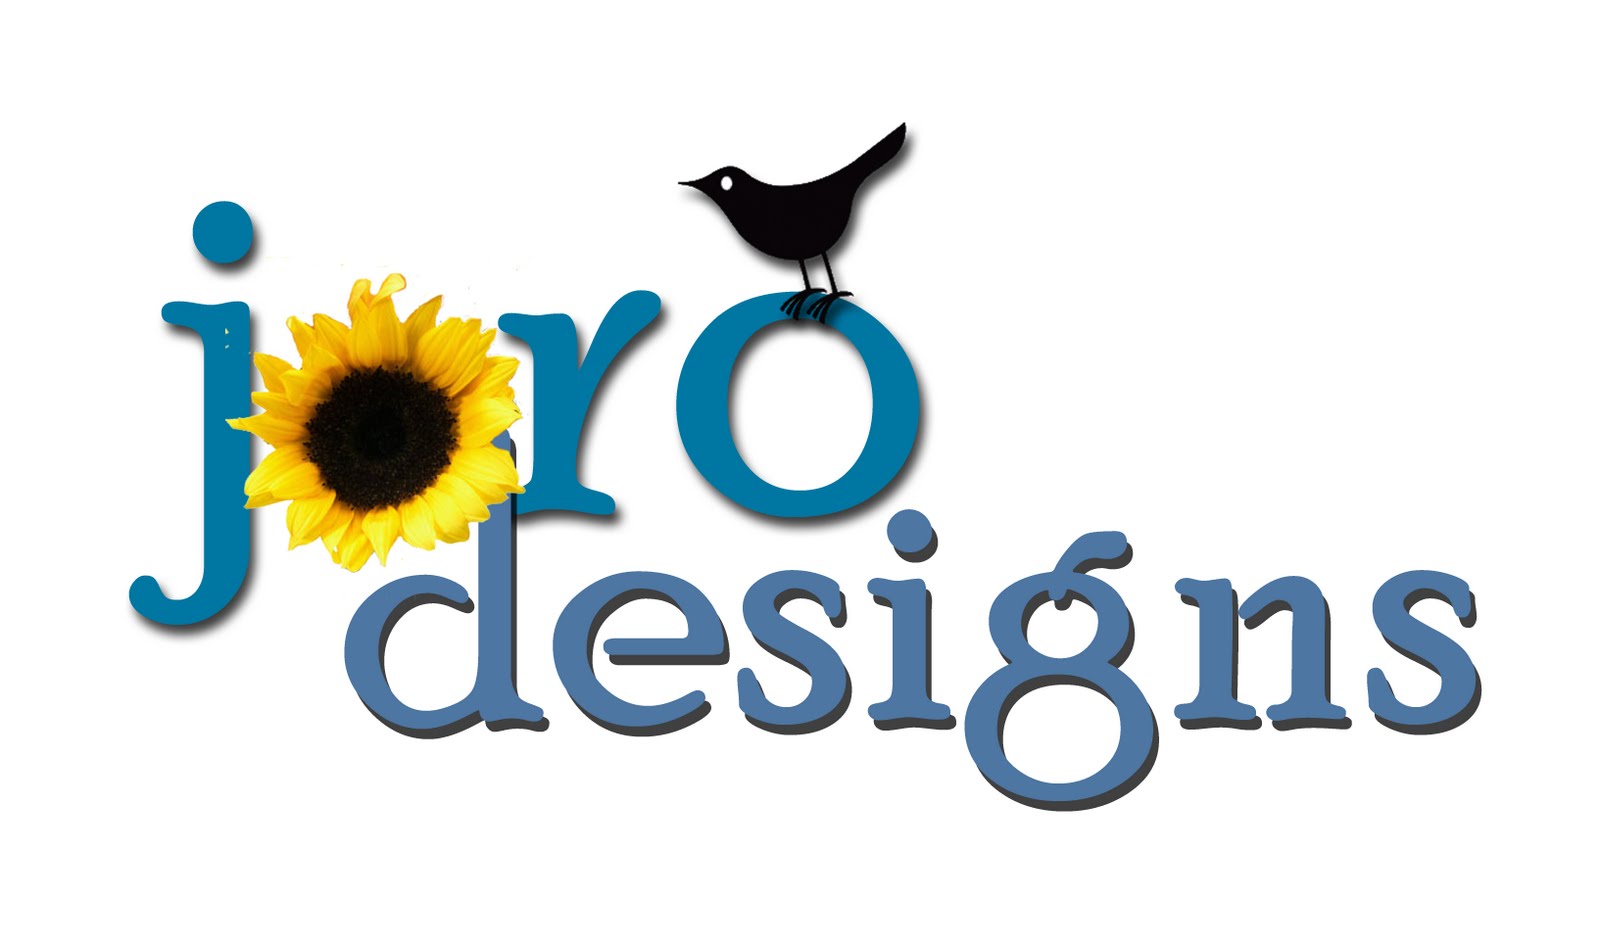 joro designs